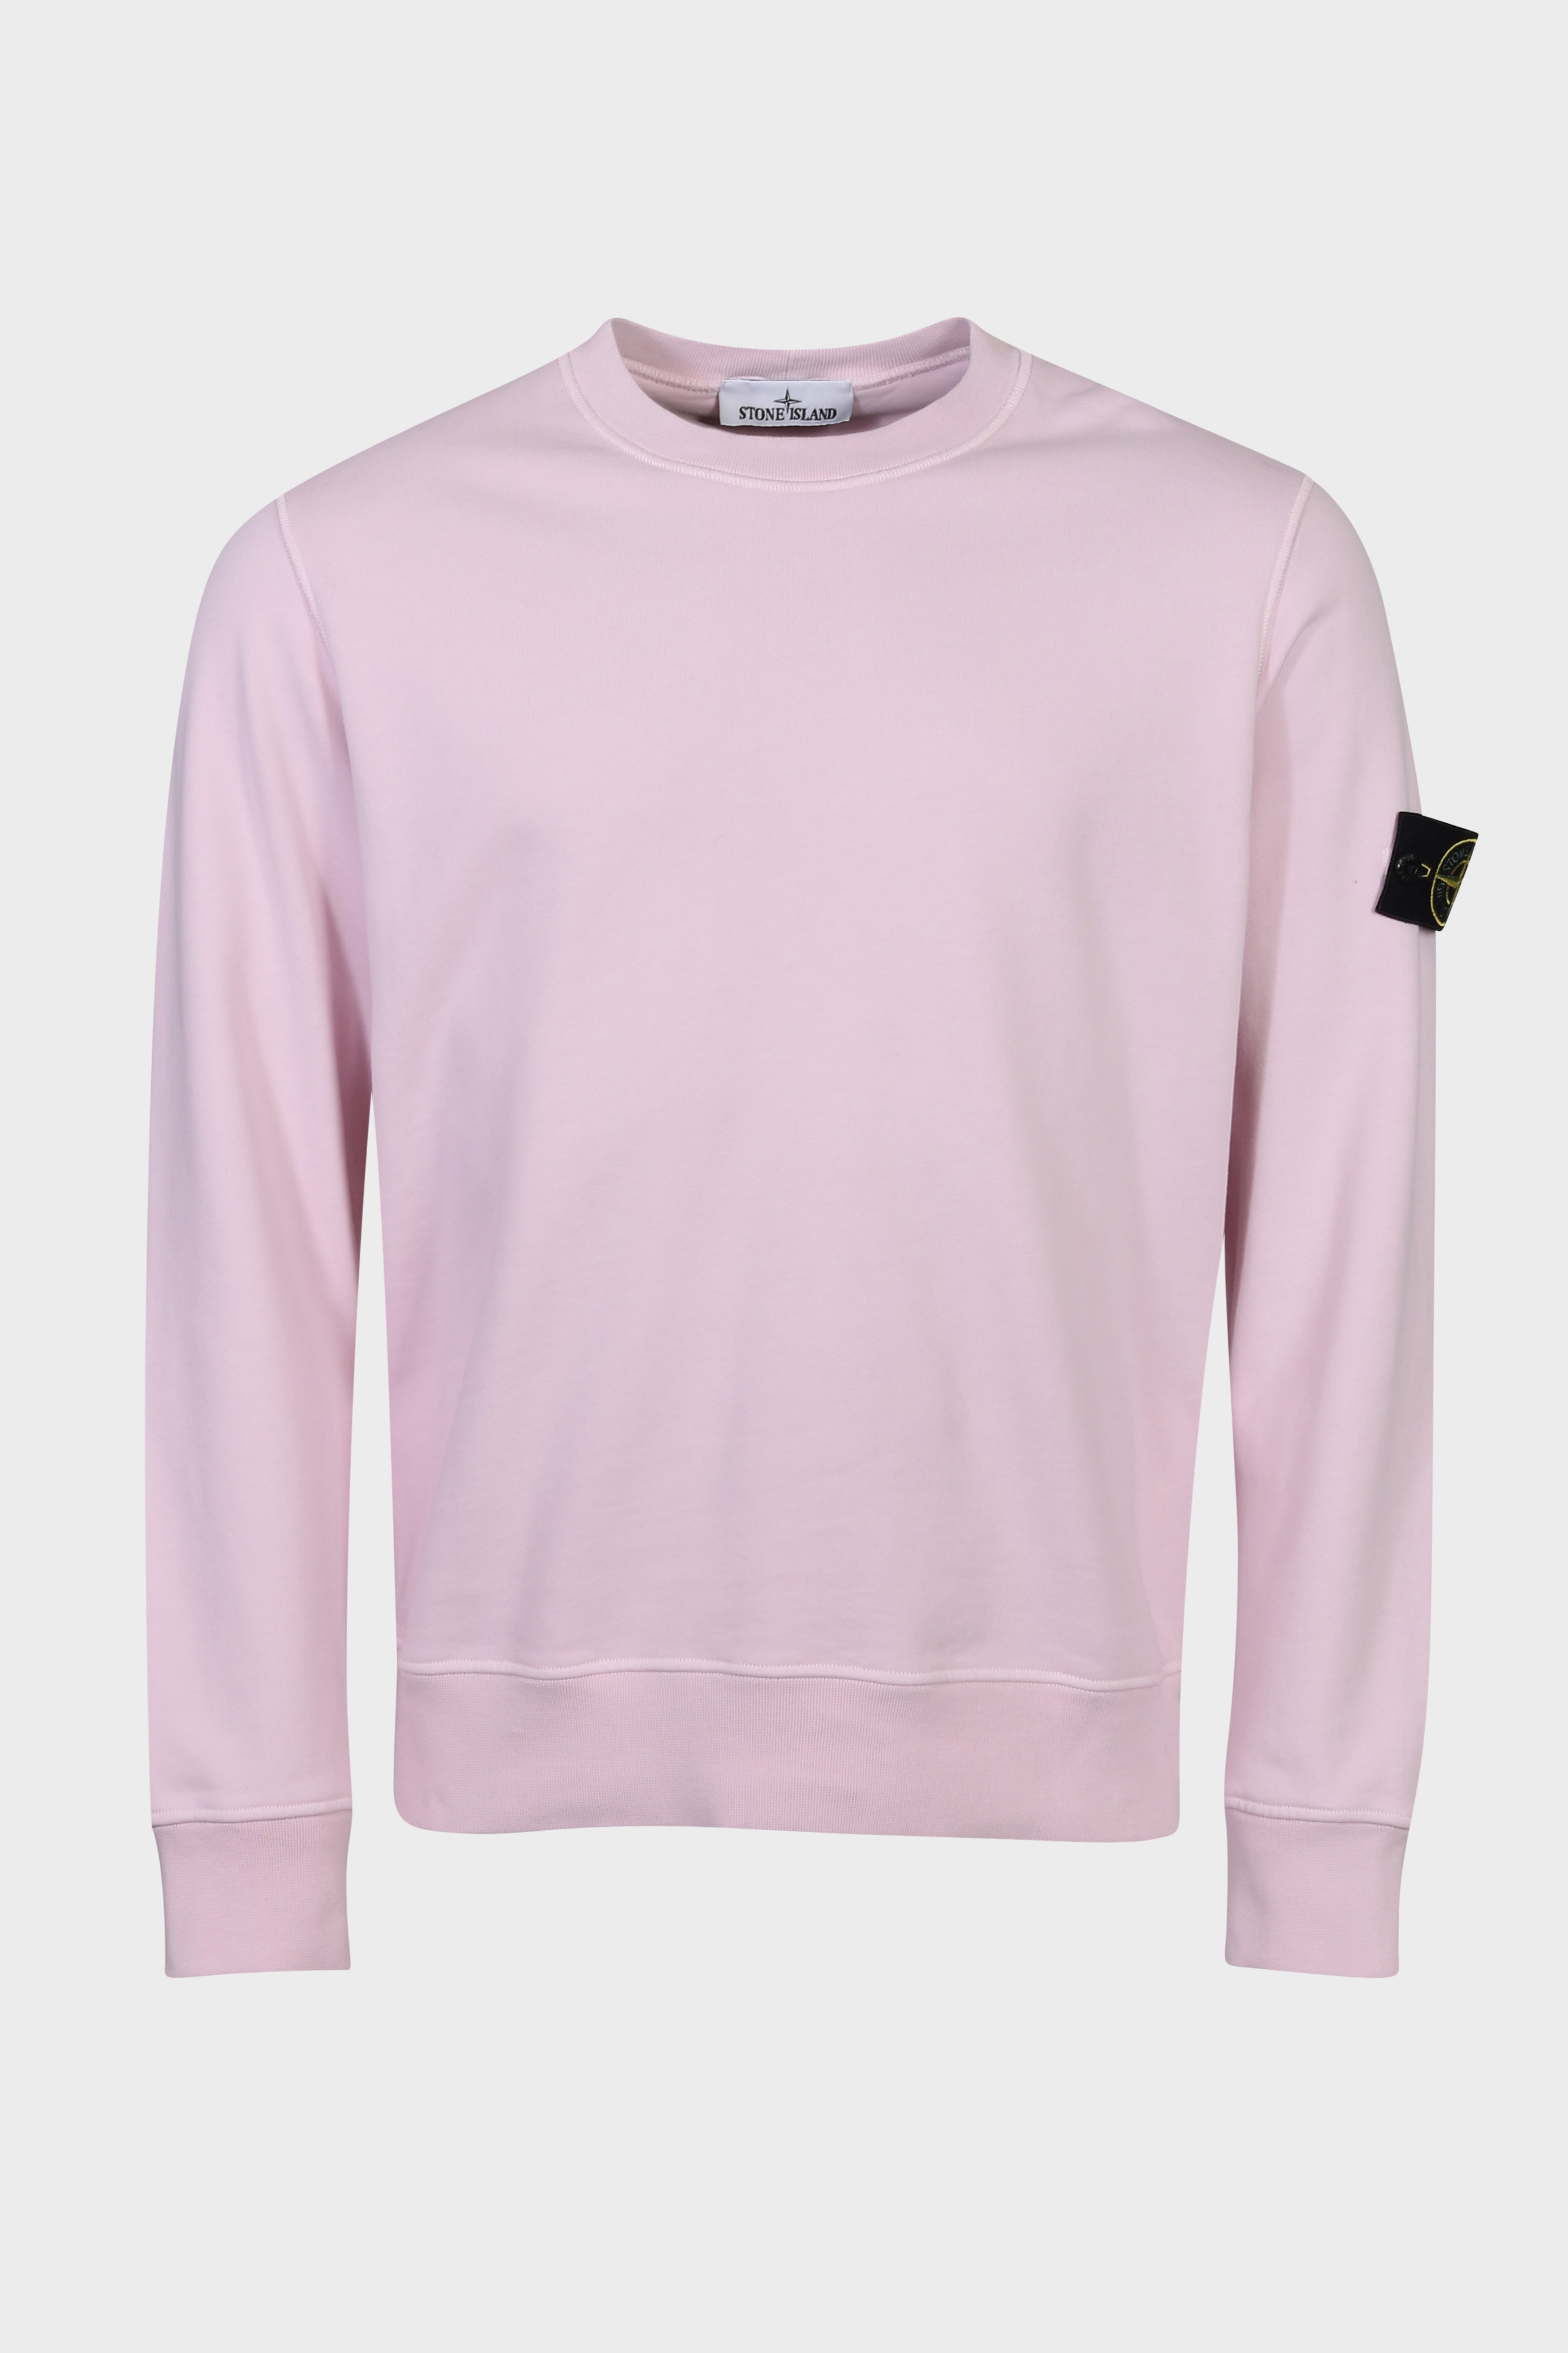 STONE ISLAND Sweatshirt in Light Pink